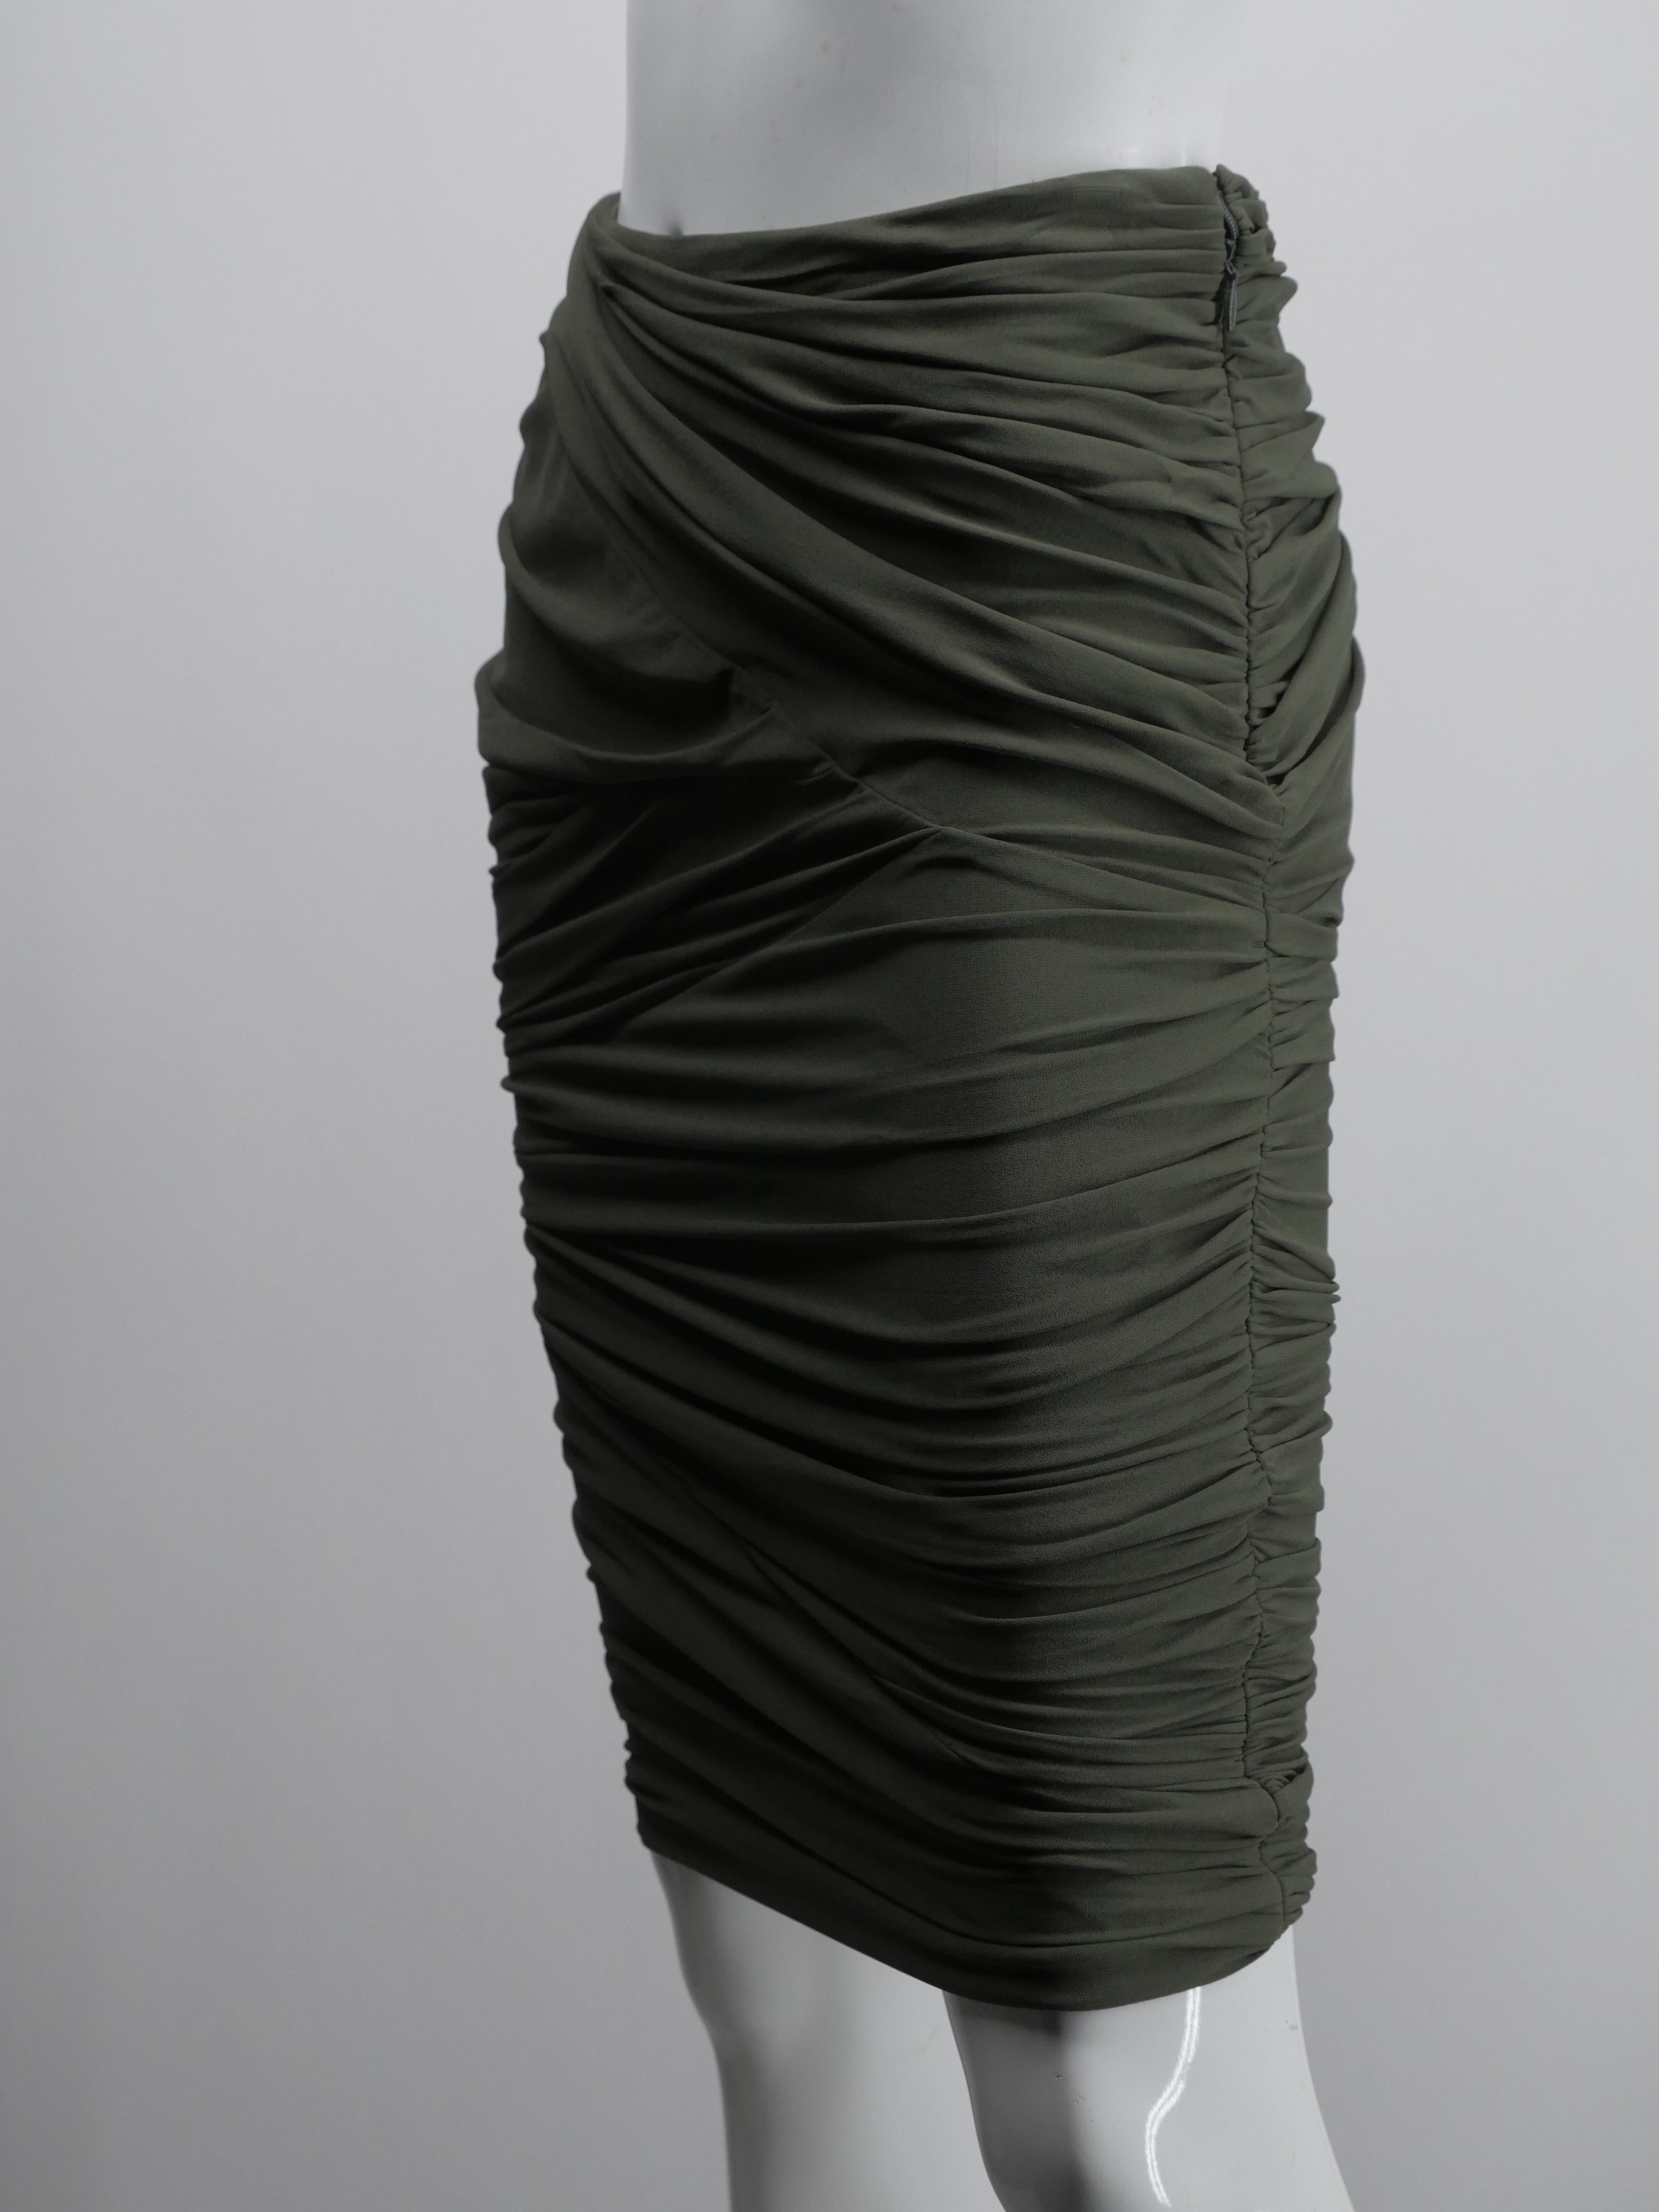 Ralph Lauren Black Label Size 6 Olive Green Ruched Skirt 3